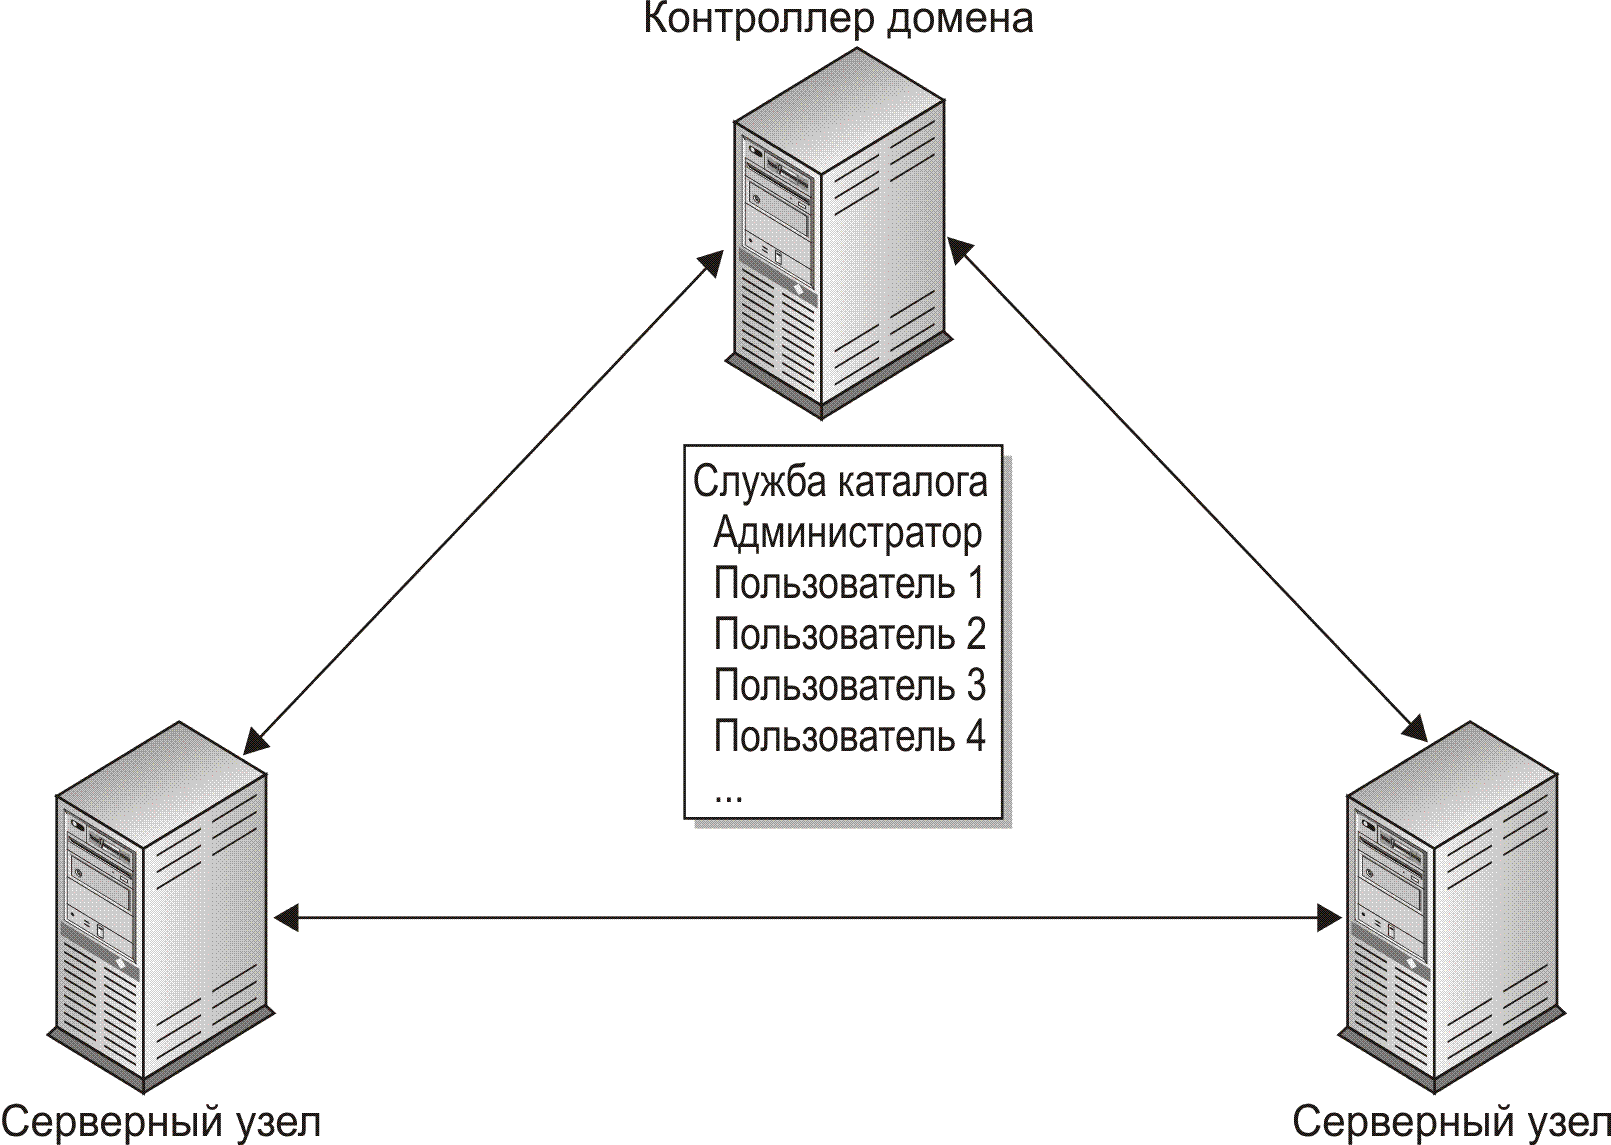 Второй контроллер домена. Сервер контроллер домена. Схема сети с контроллером домена. Контроллер домена на виндовс сервер. Схема работы контроллера домена.